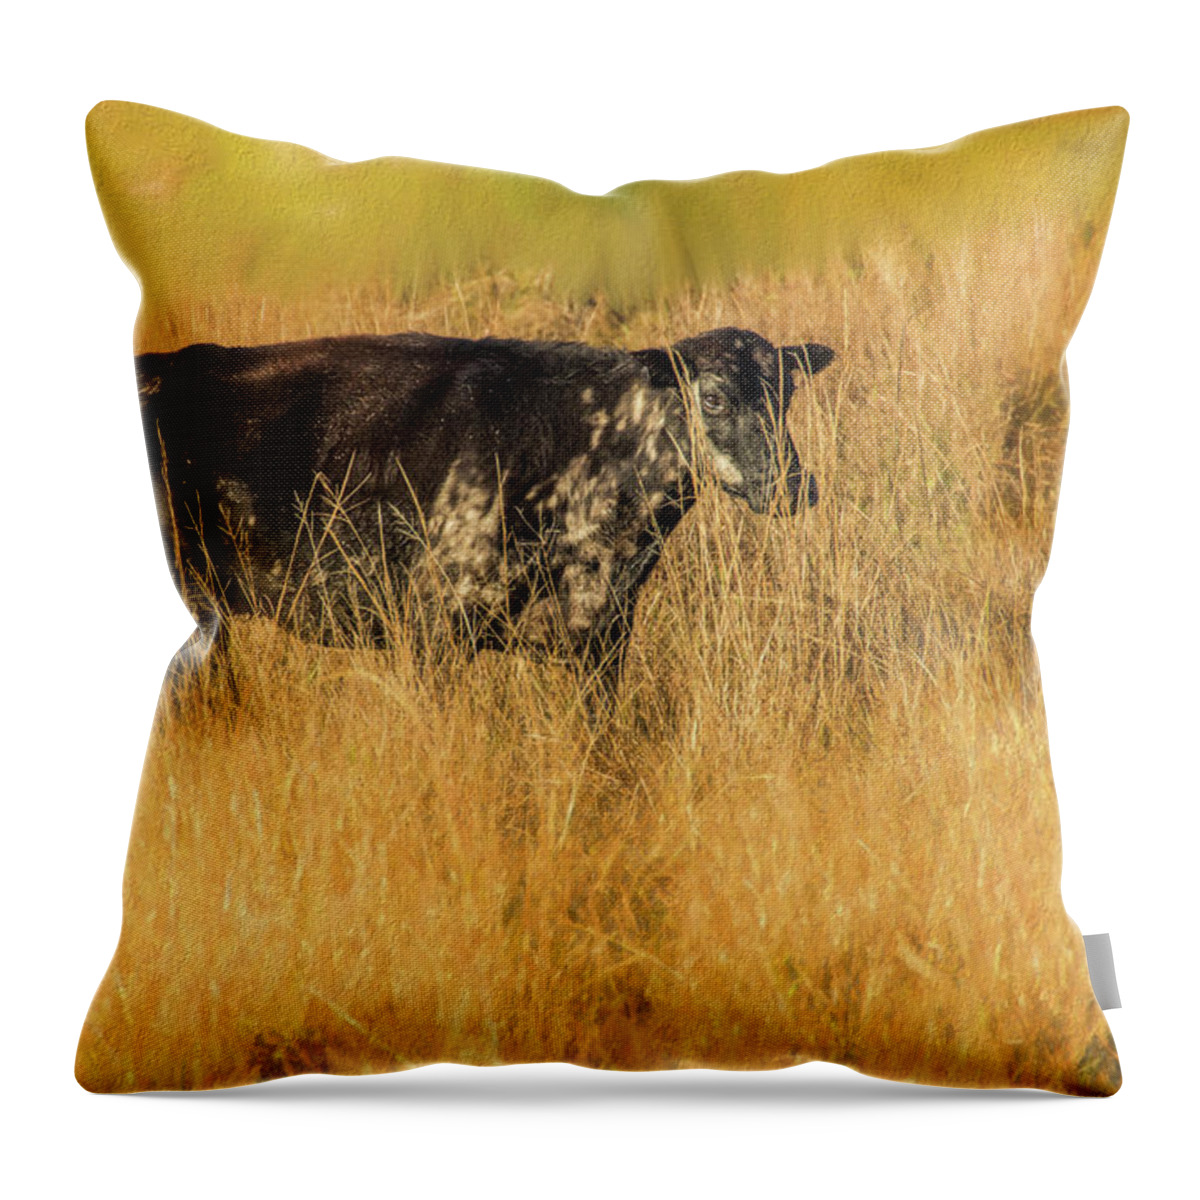 Okeechobee Trip Throw Pillow featuring the photograph Meadow Bovine by Richard Goldman